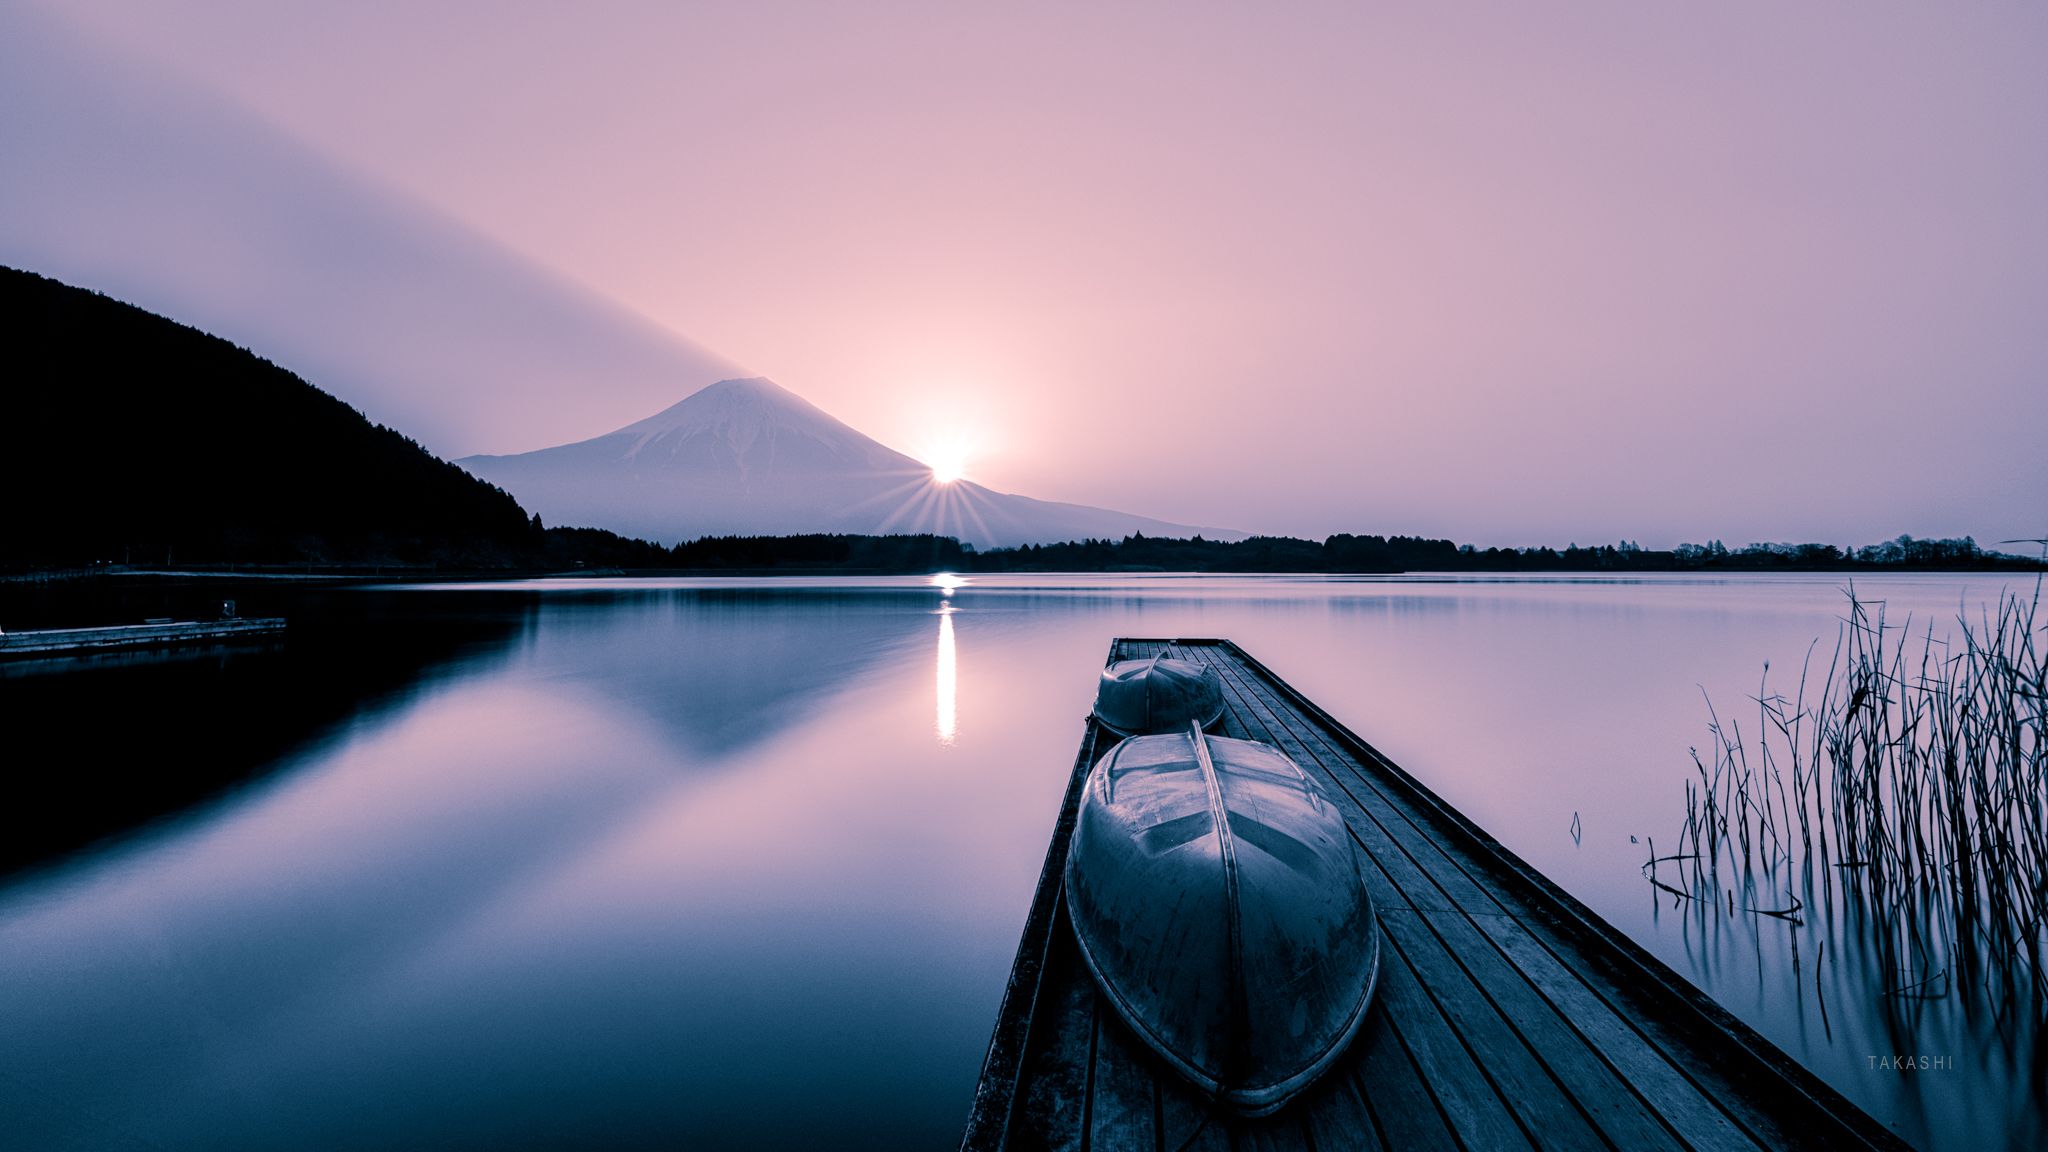 Fuji,Japan,mountain,lake,water,reflection,boat, Takashi